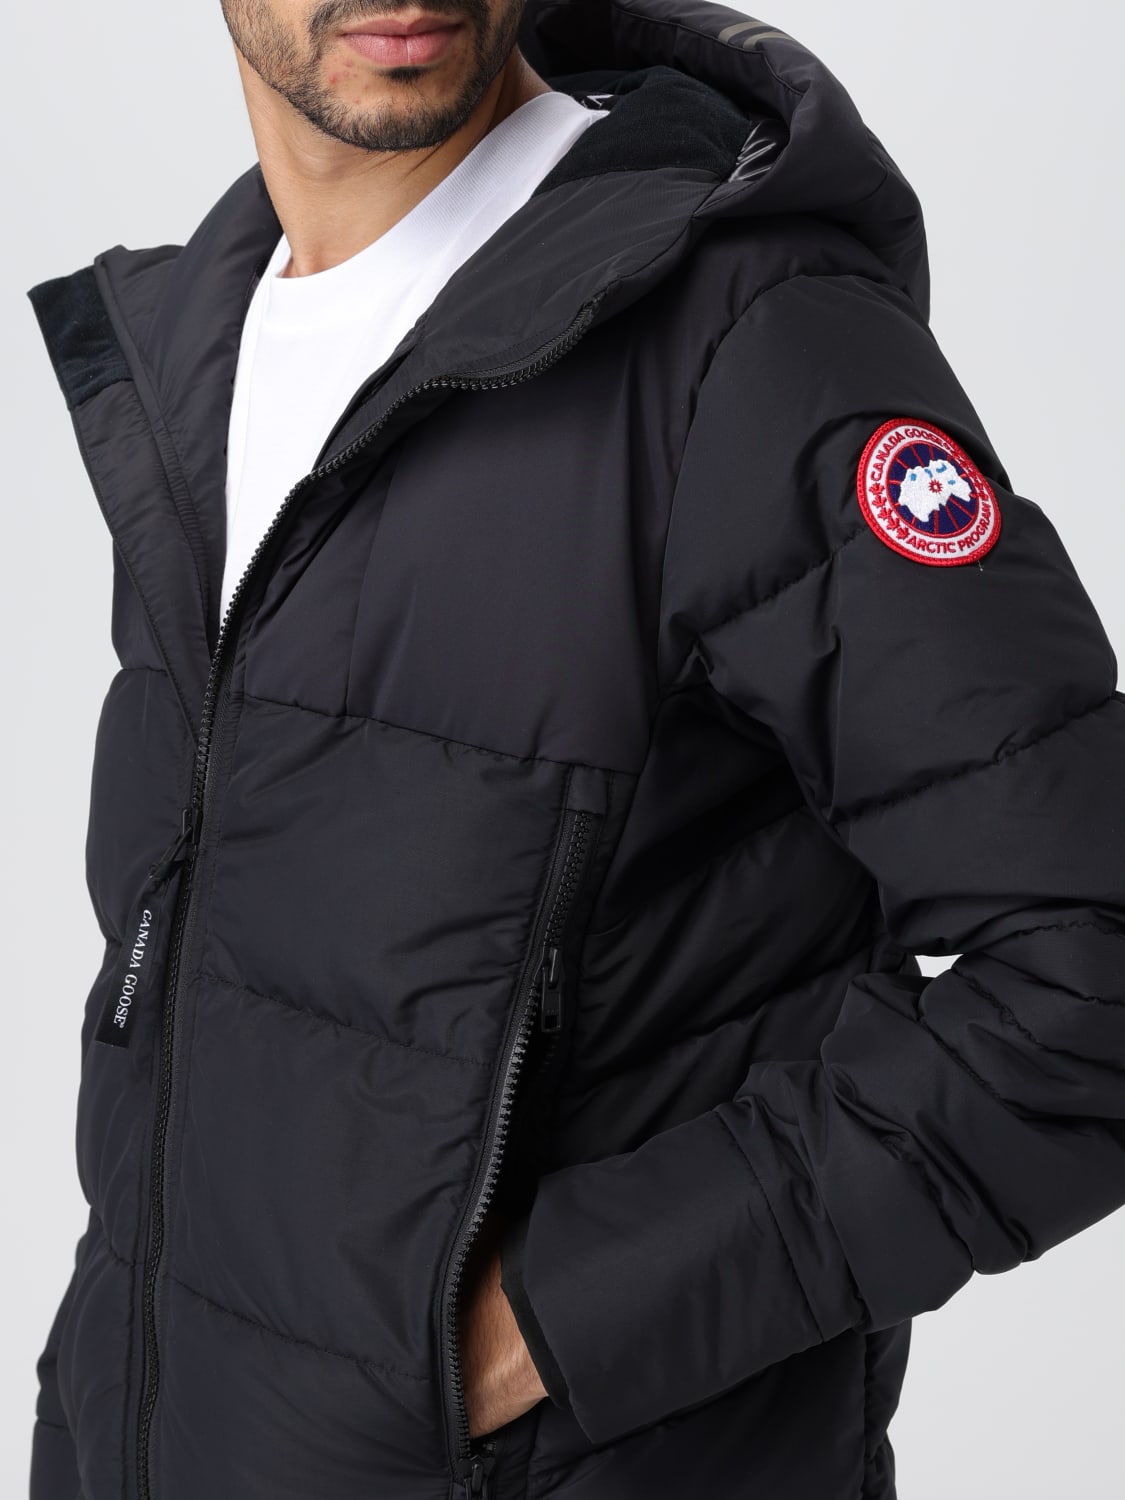 CANADA GOOSE: jacket for man - Black | Canada Goose jacket 2742M